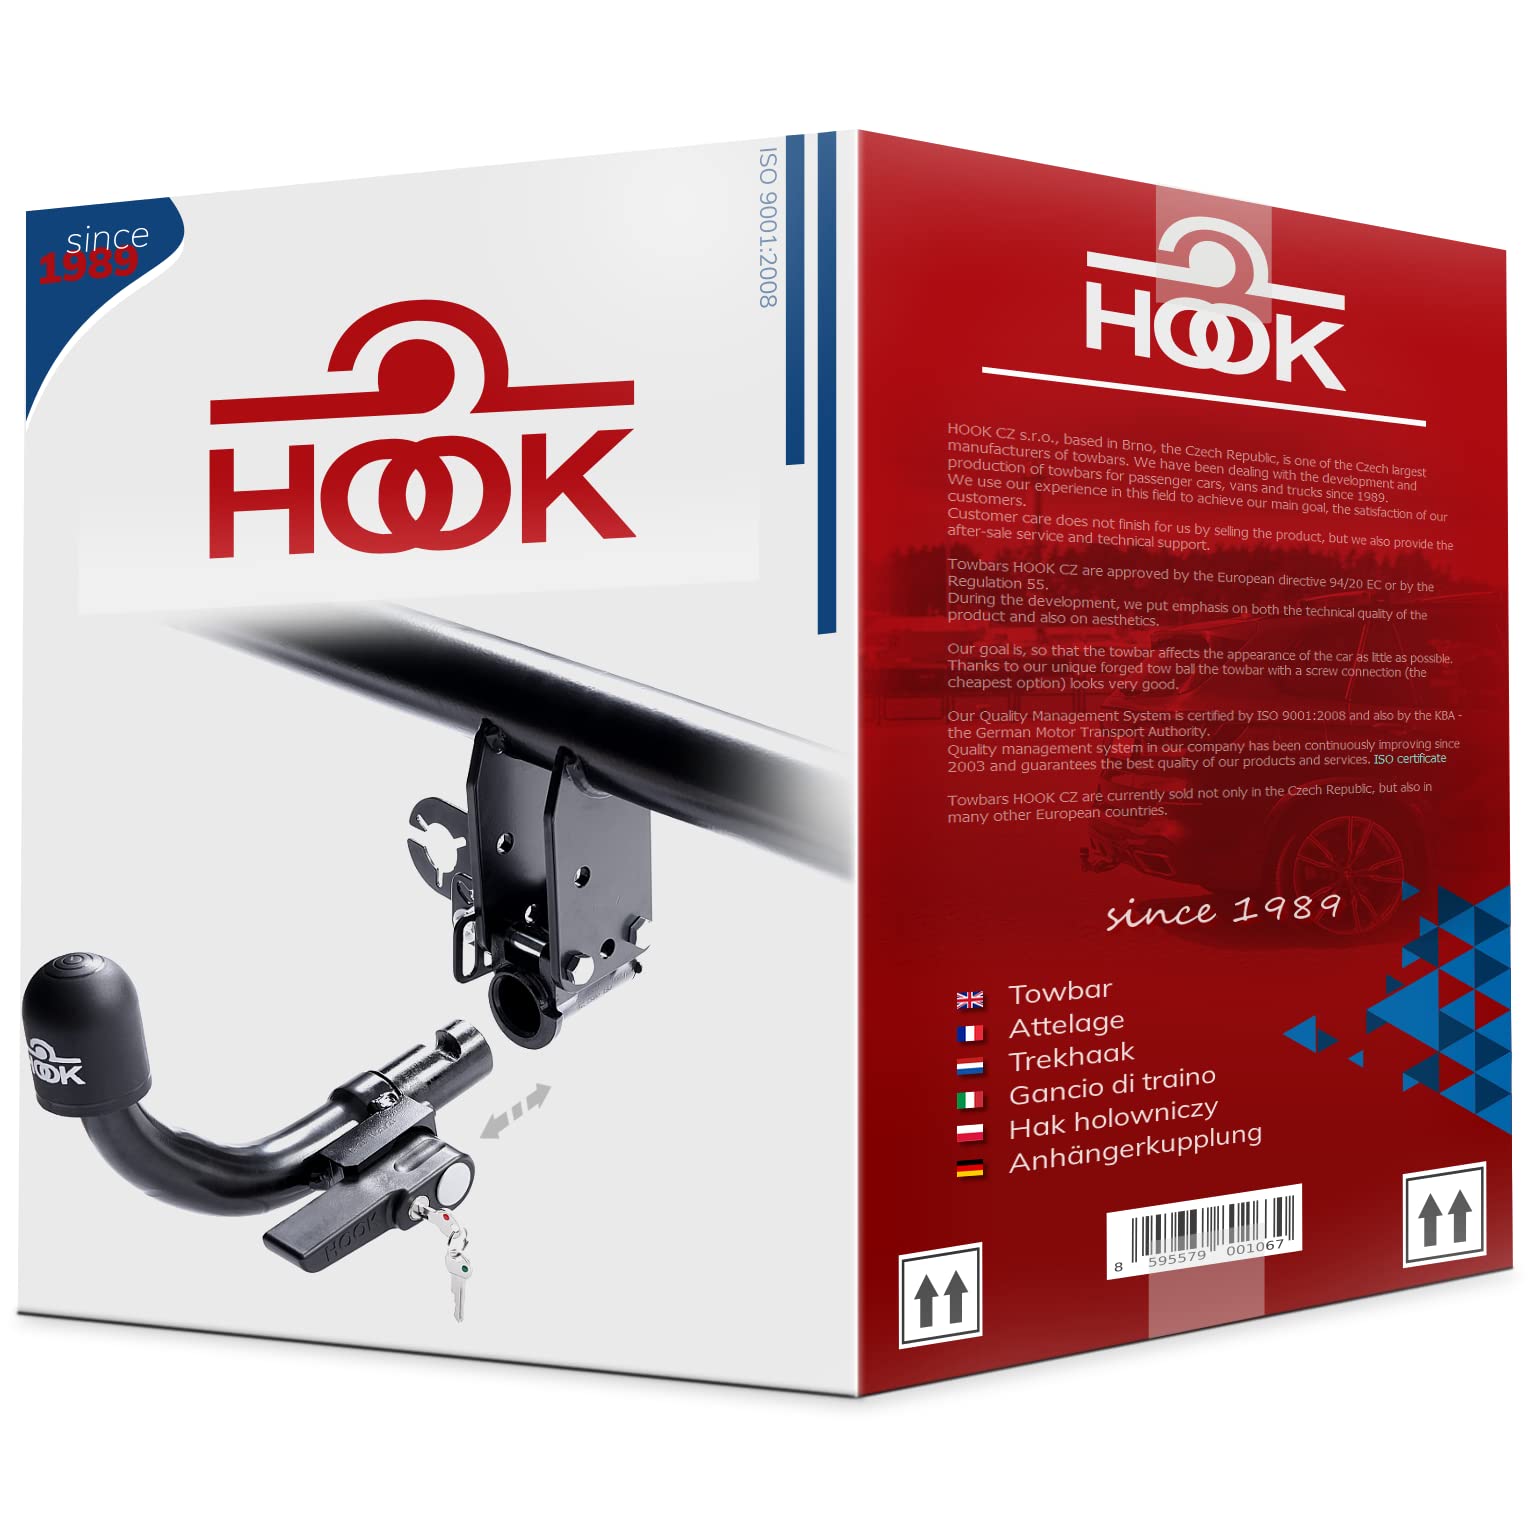 Hook horizontal abnehmbare AHK Anhängerkupplung für Hyundai ix35 I 2010-2015 + universell Elektrosatz 7-polig von Hook